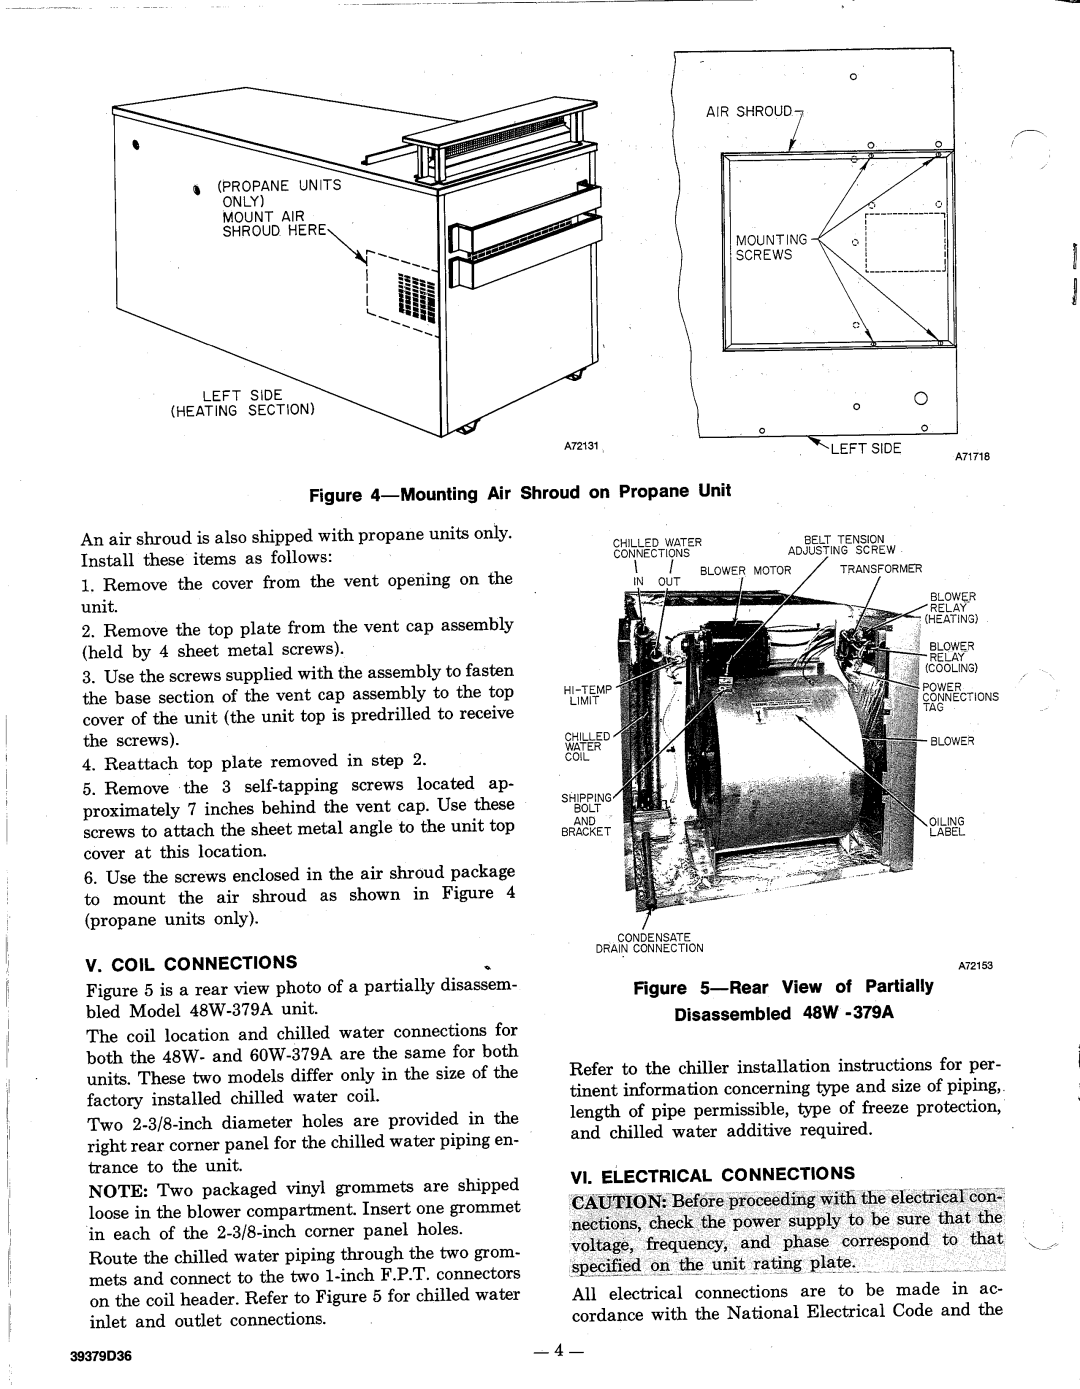 Bryant 379A manual 